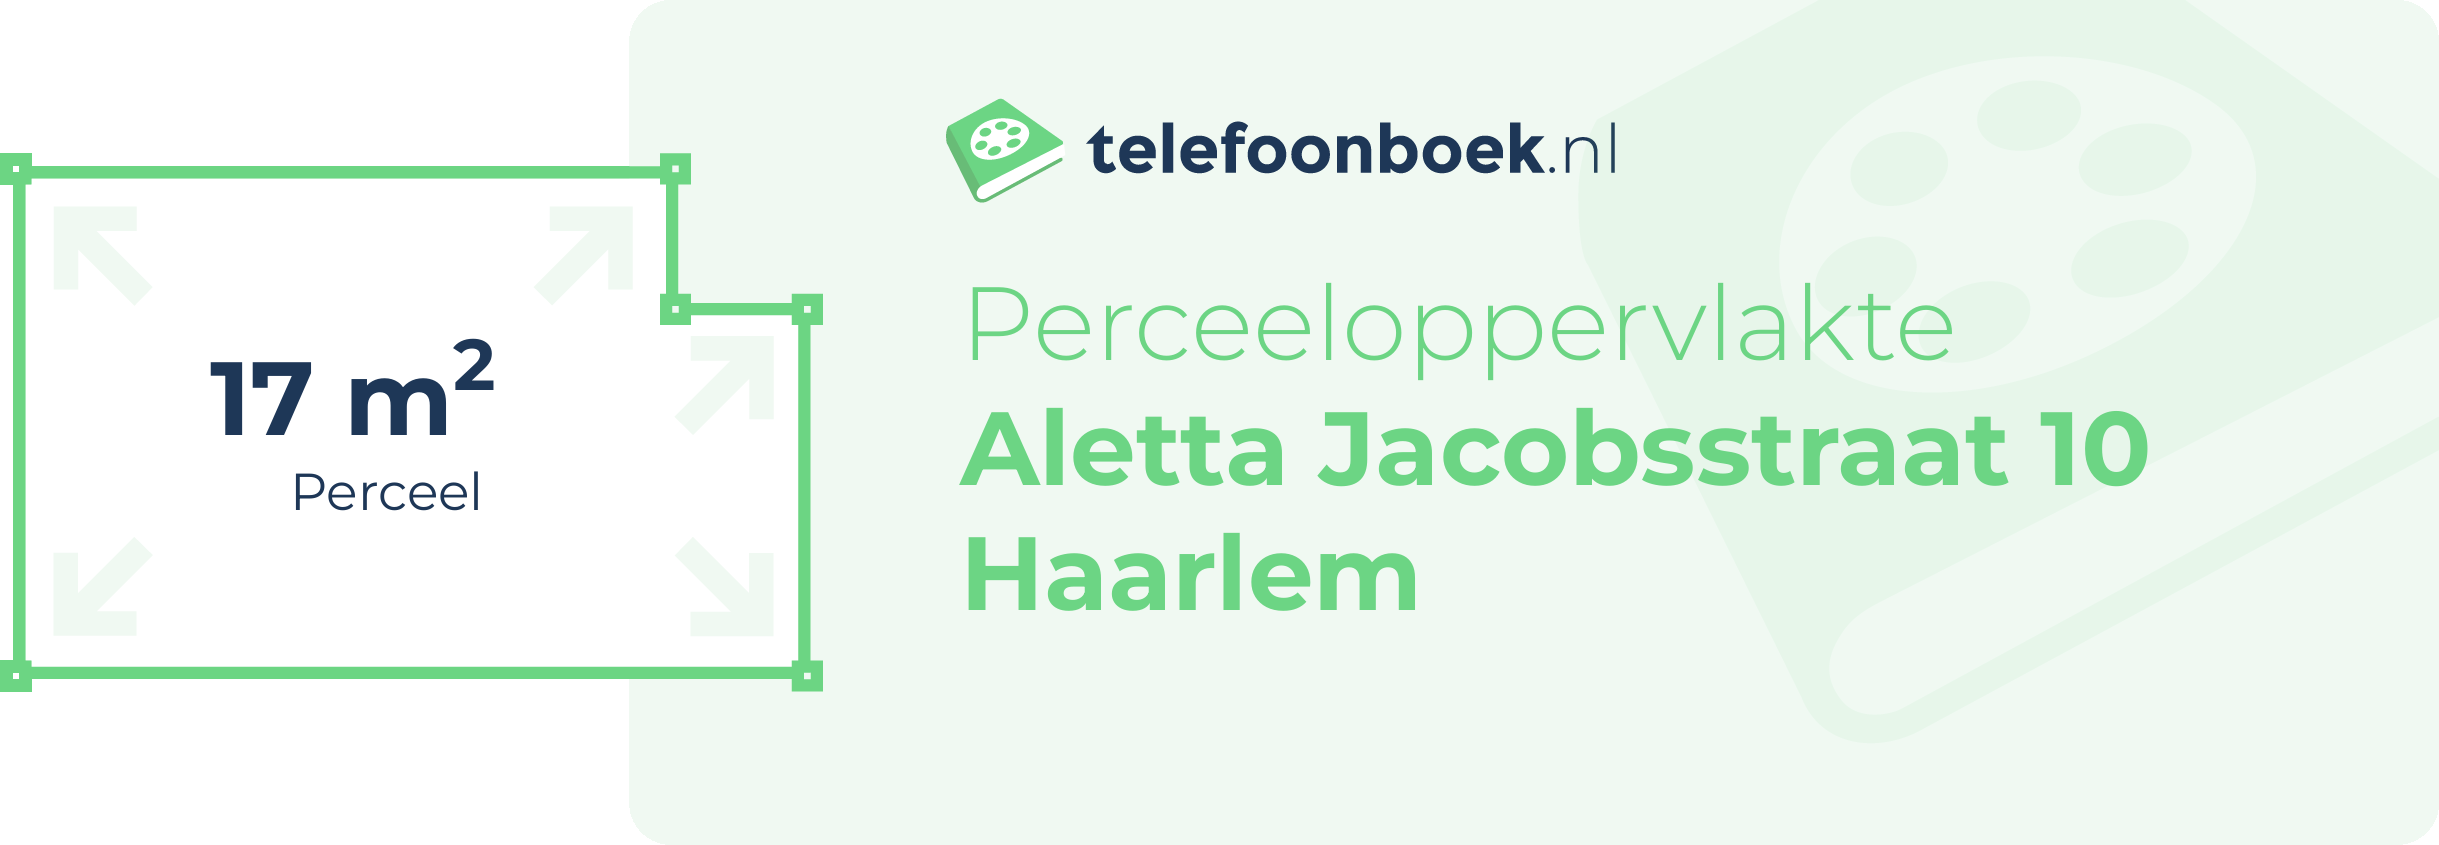 Perceeloppervlakte Aletta Jacobsstraat 10 Haarlem